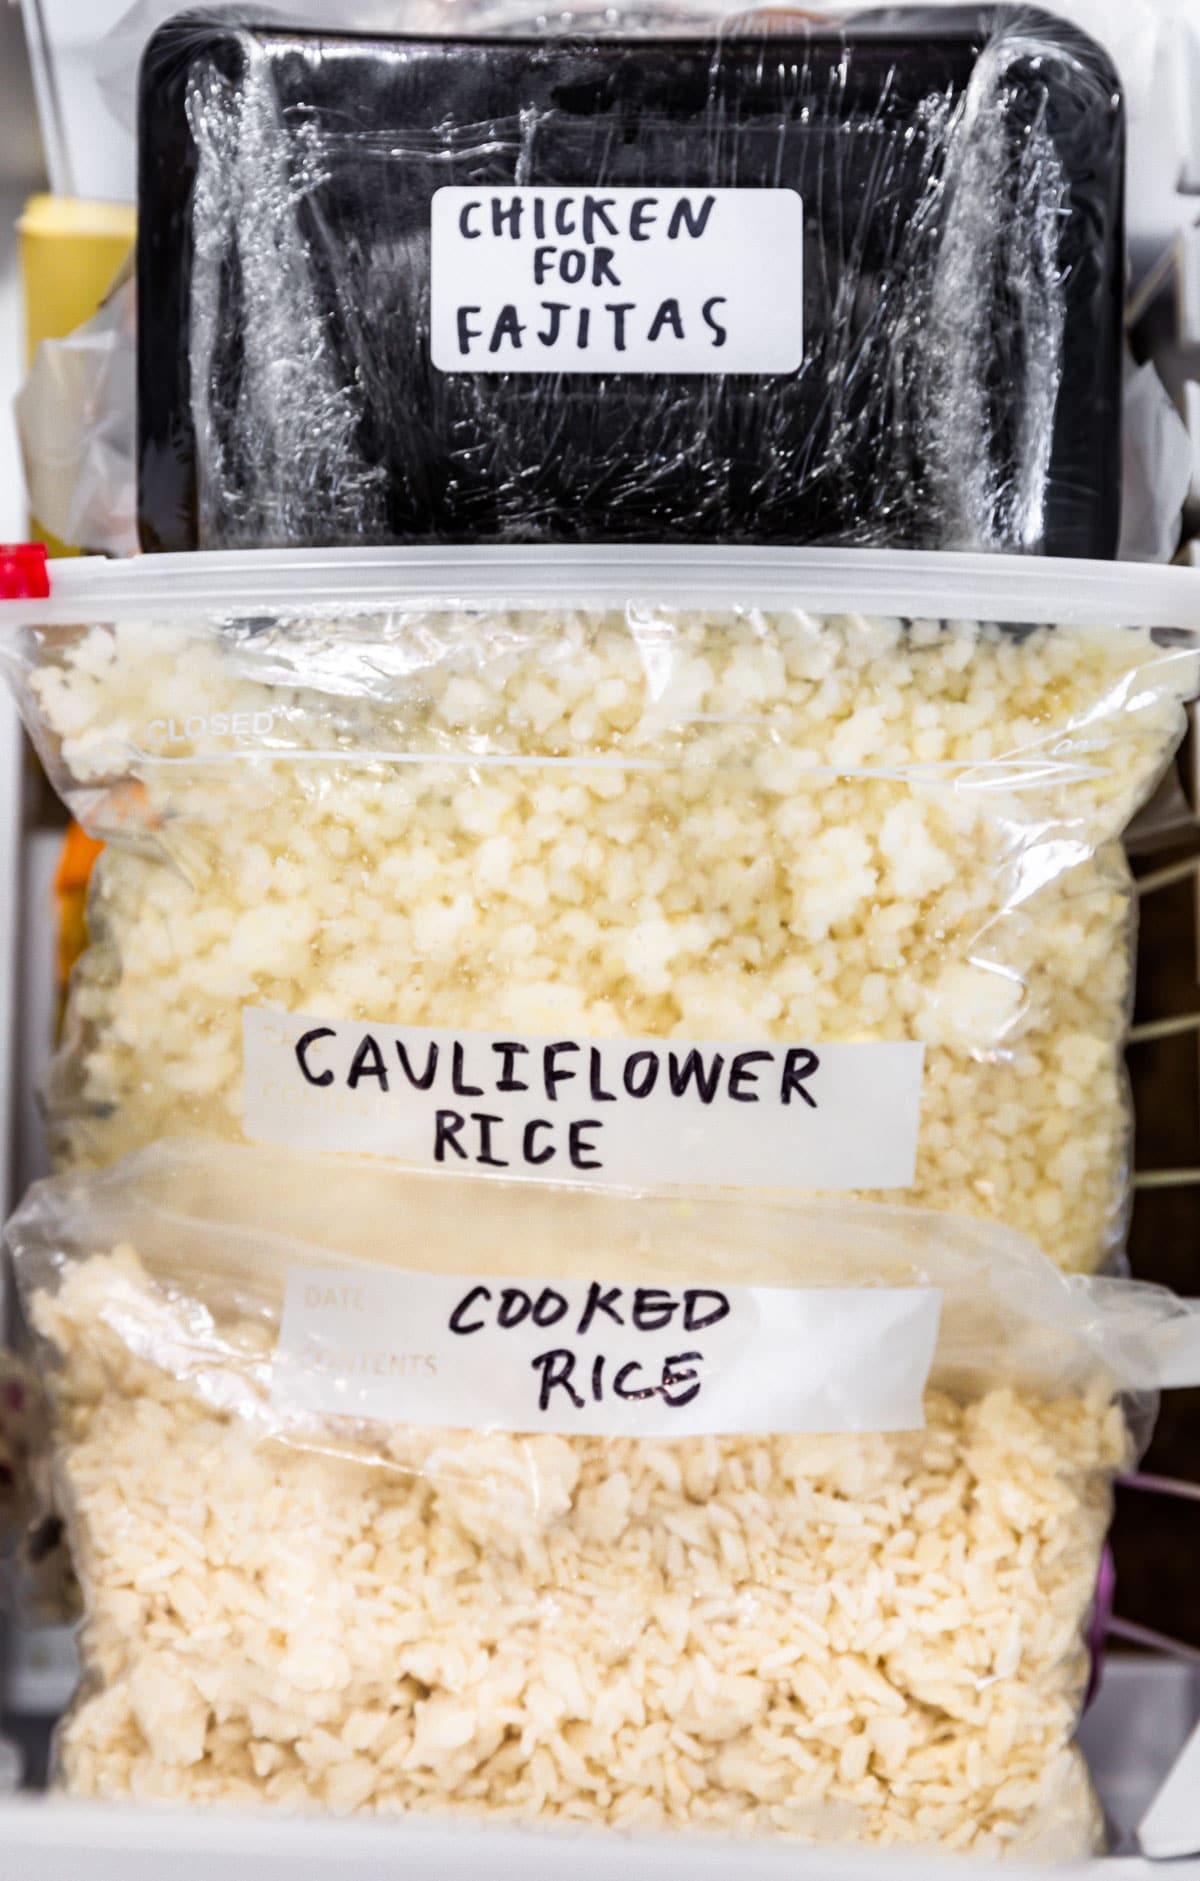 Frozen cauliflower rice in ziplock bag in a freezer.